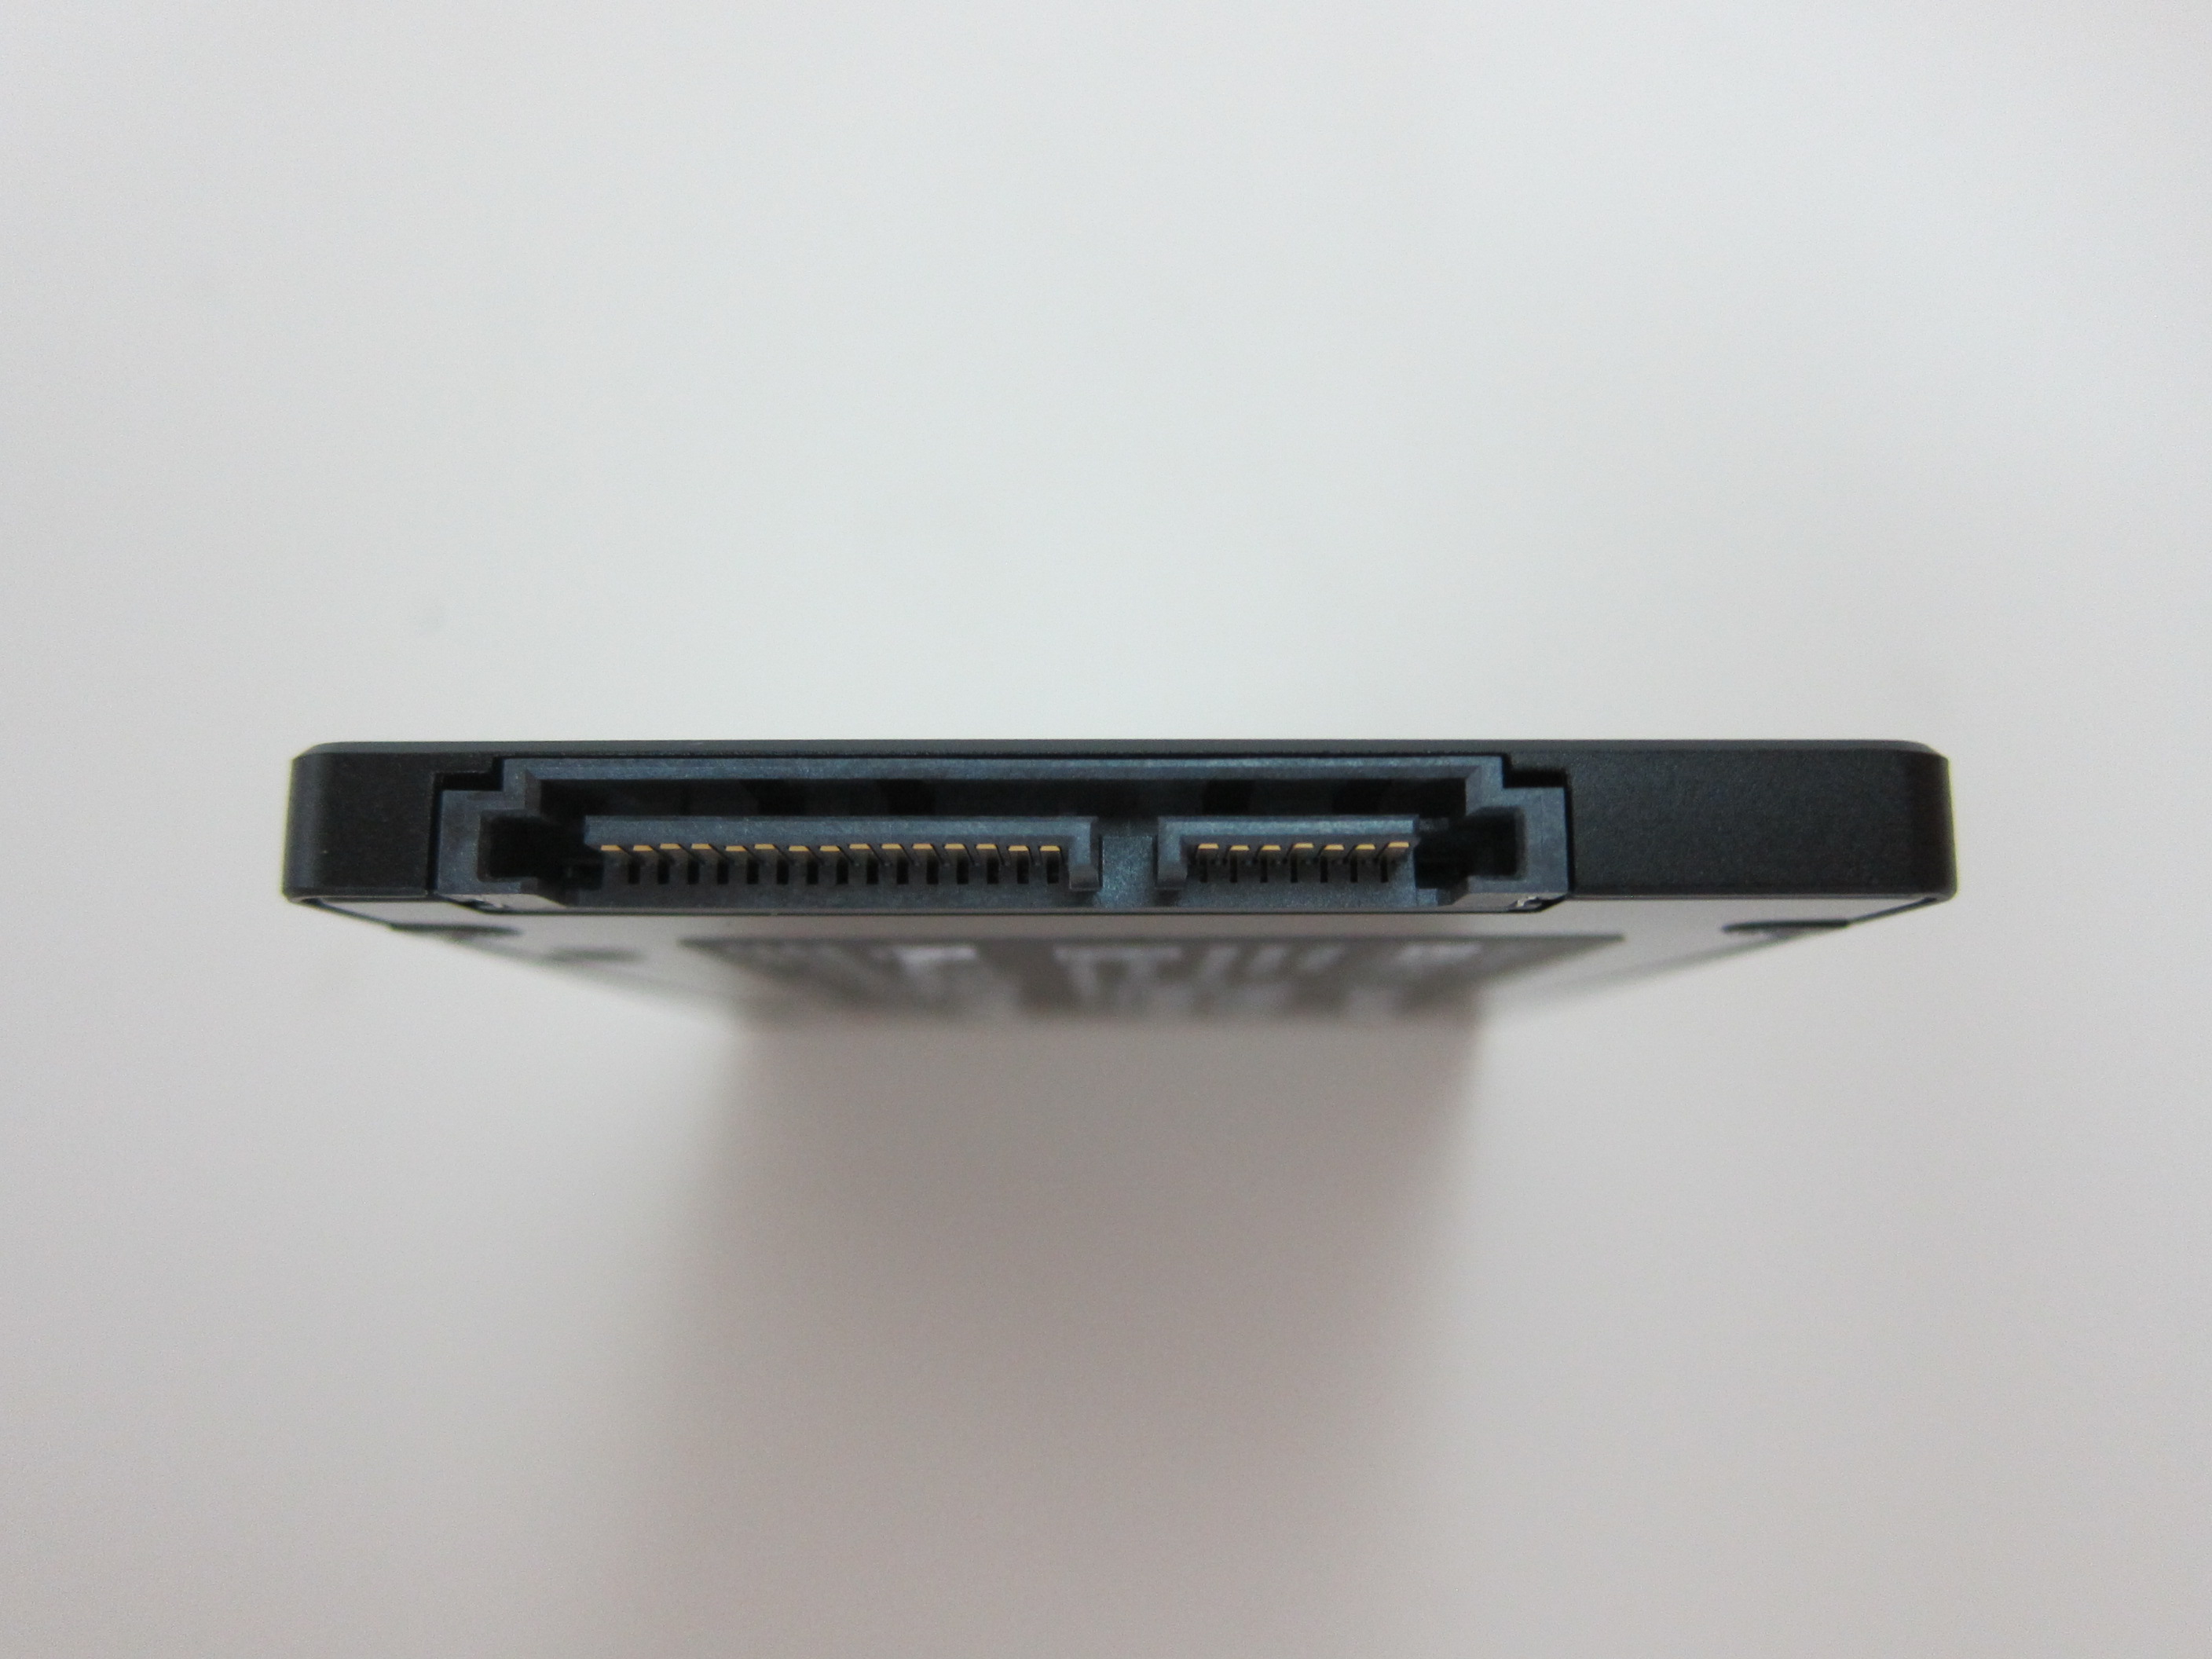 Samsung 850 EVO 250GB 2.5-Inch SATA III Internal SSD « Blog 